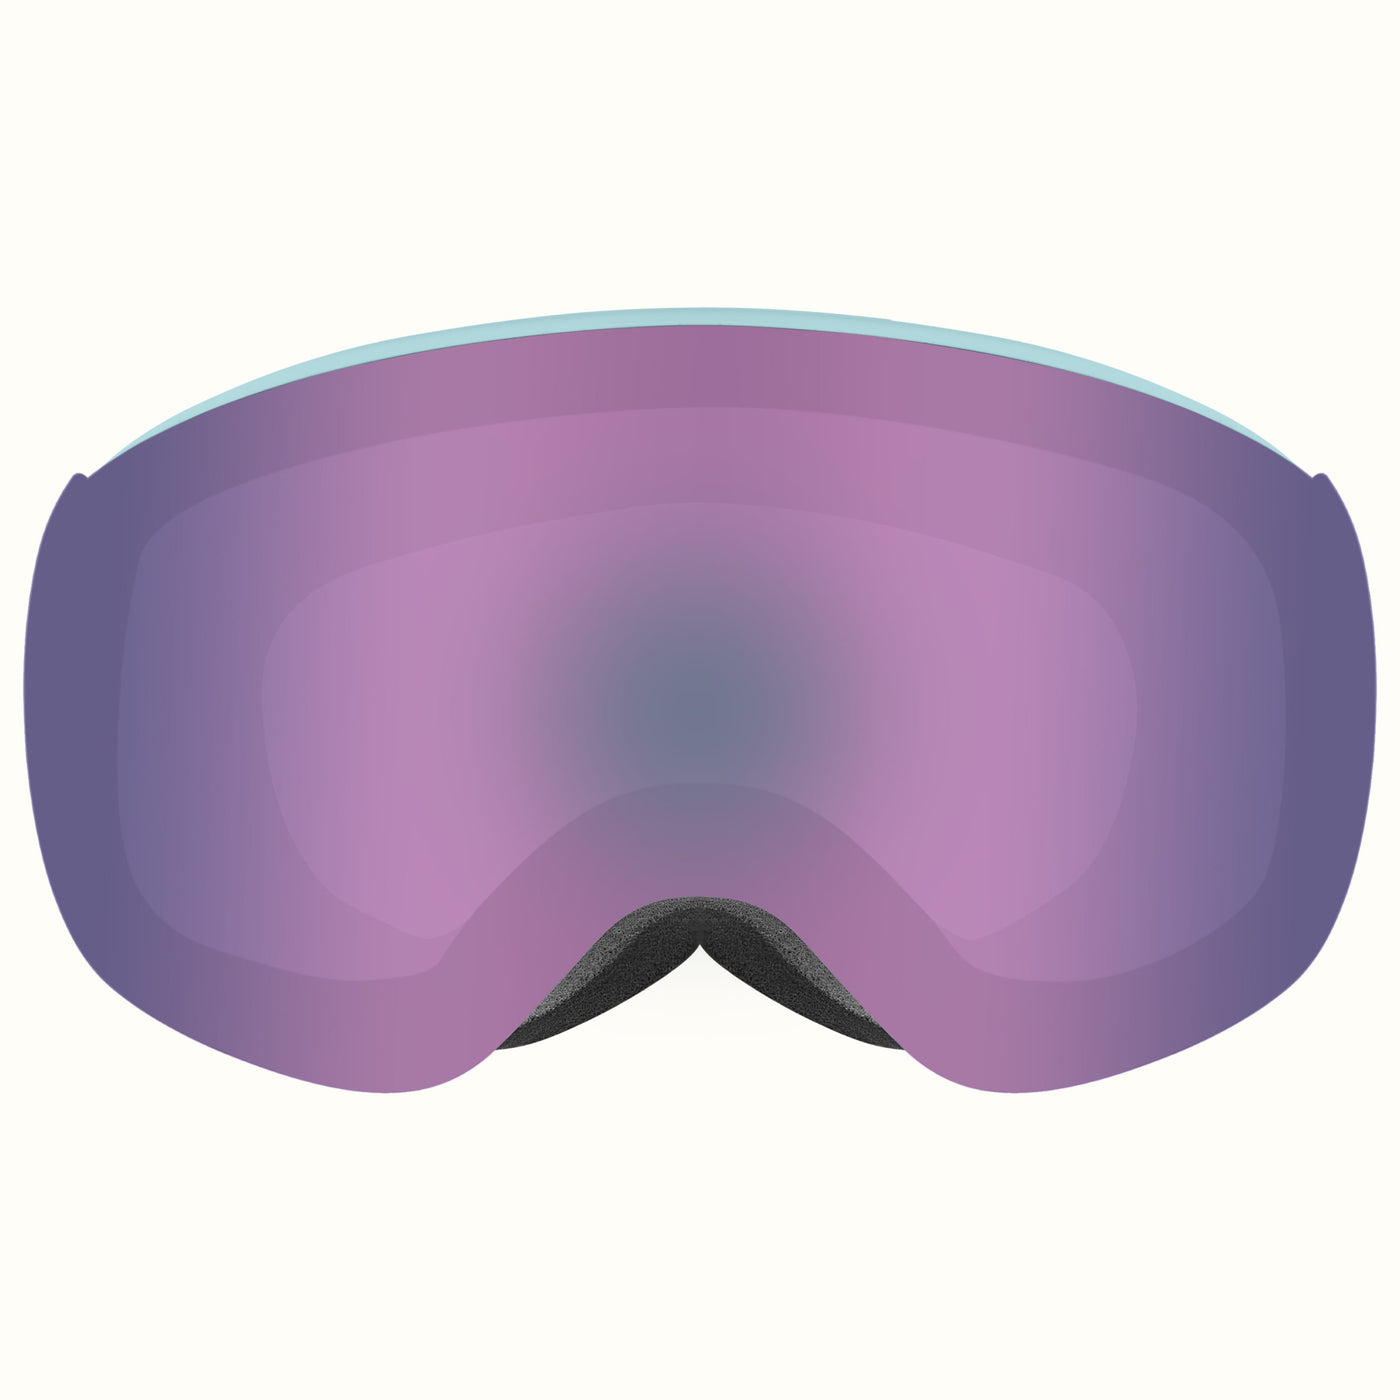 Dipper Plus Kids' Ski & Snowboard Goggles | Matte Ice and Bismuth